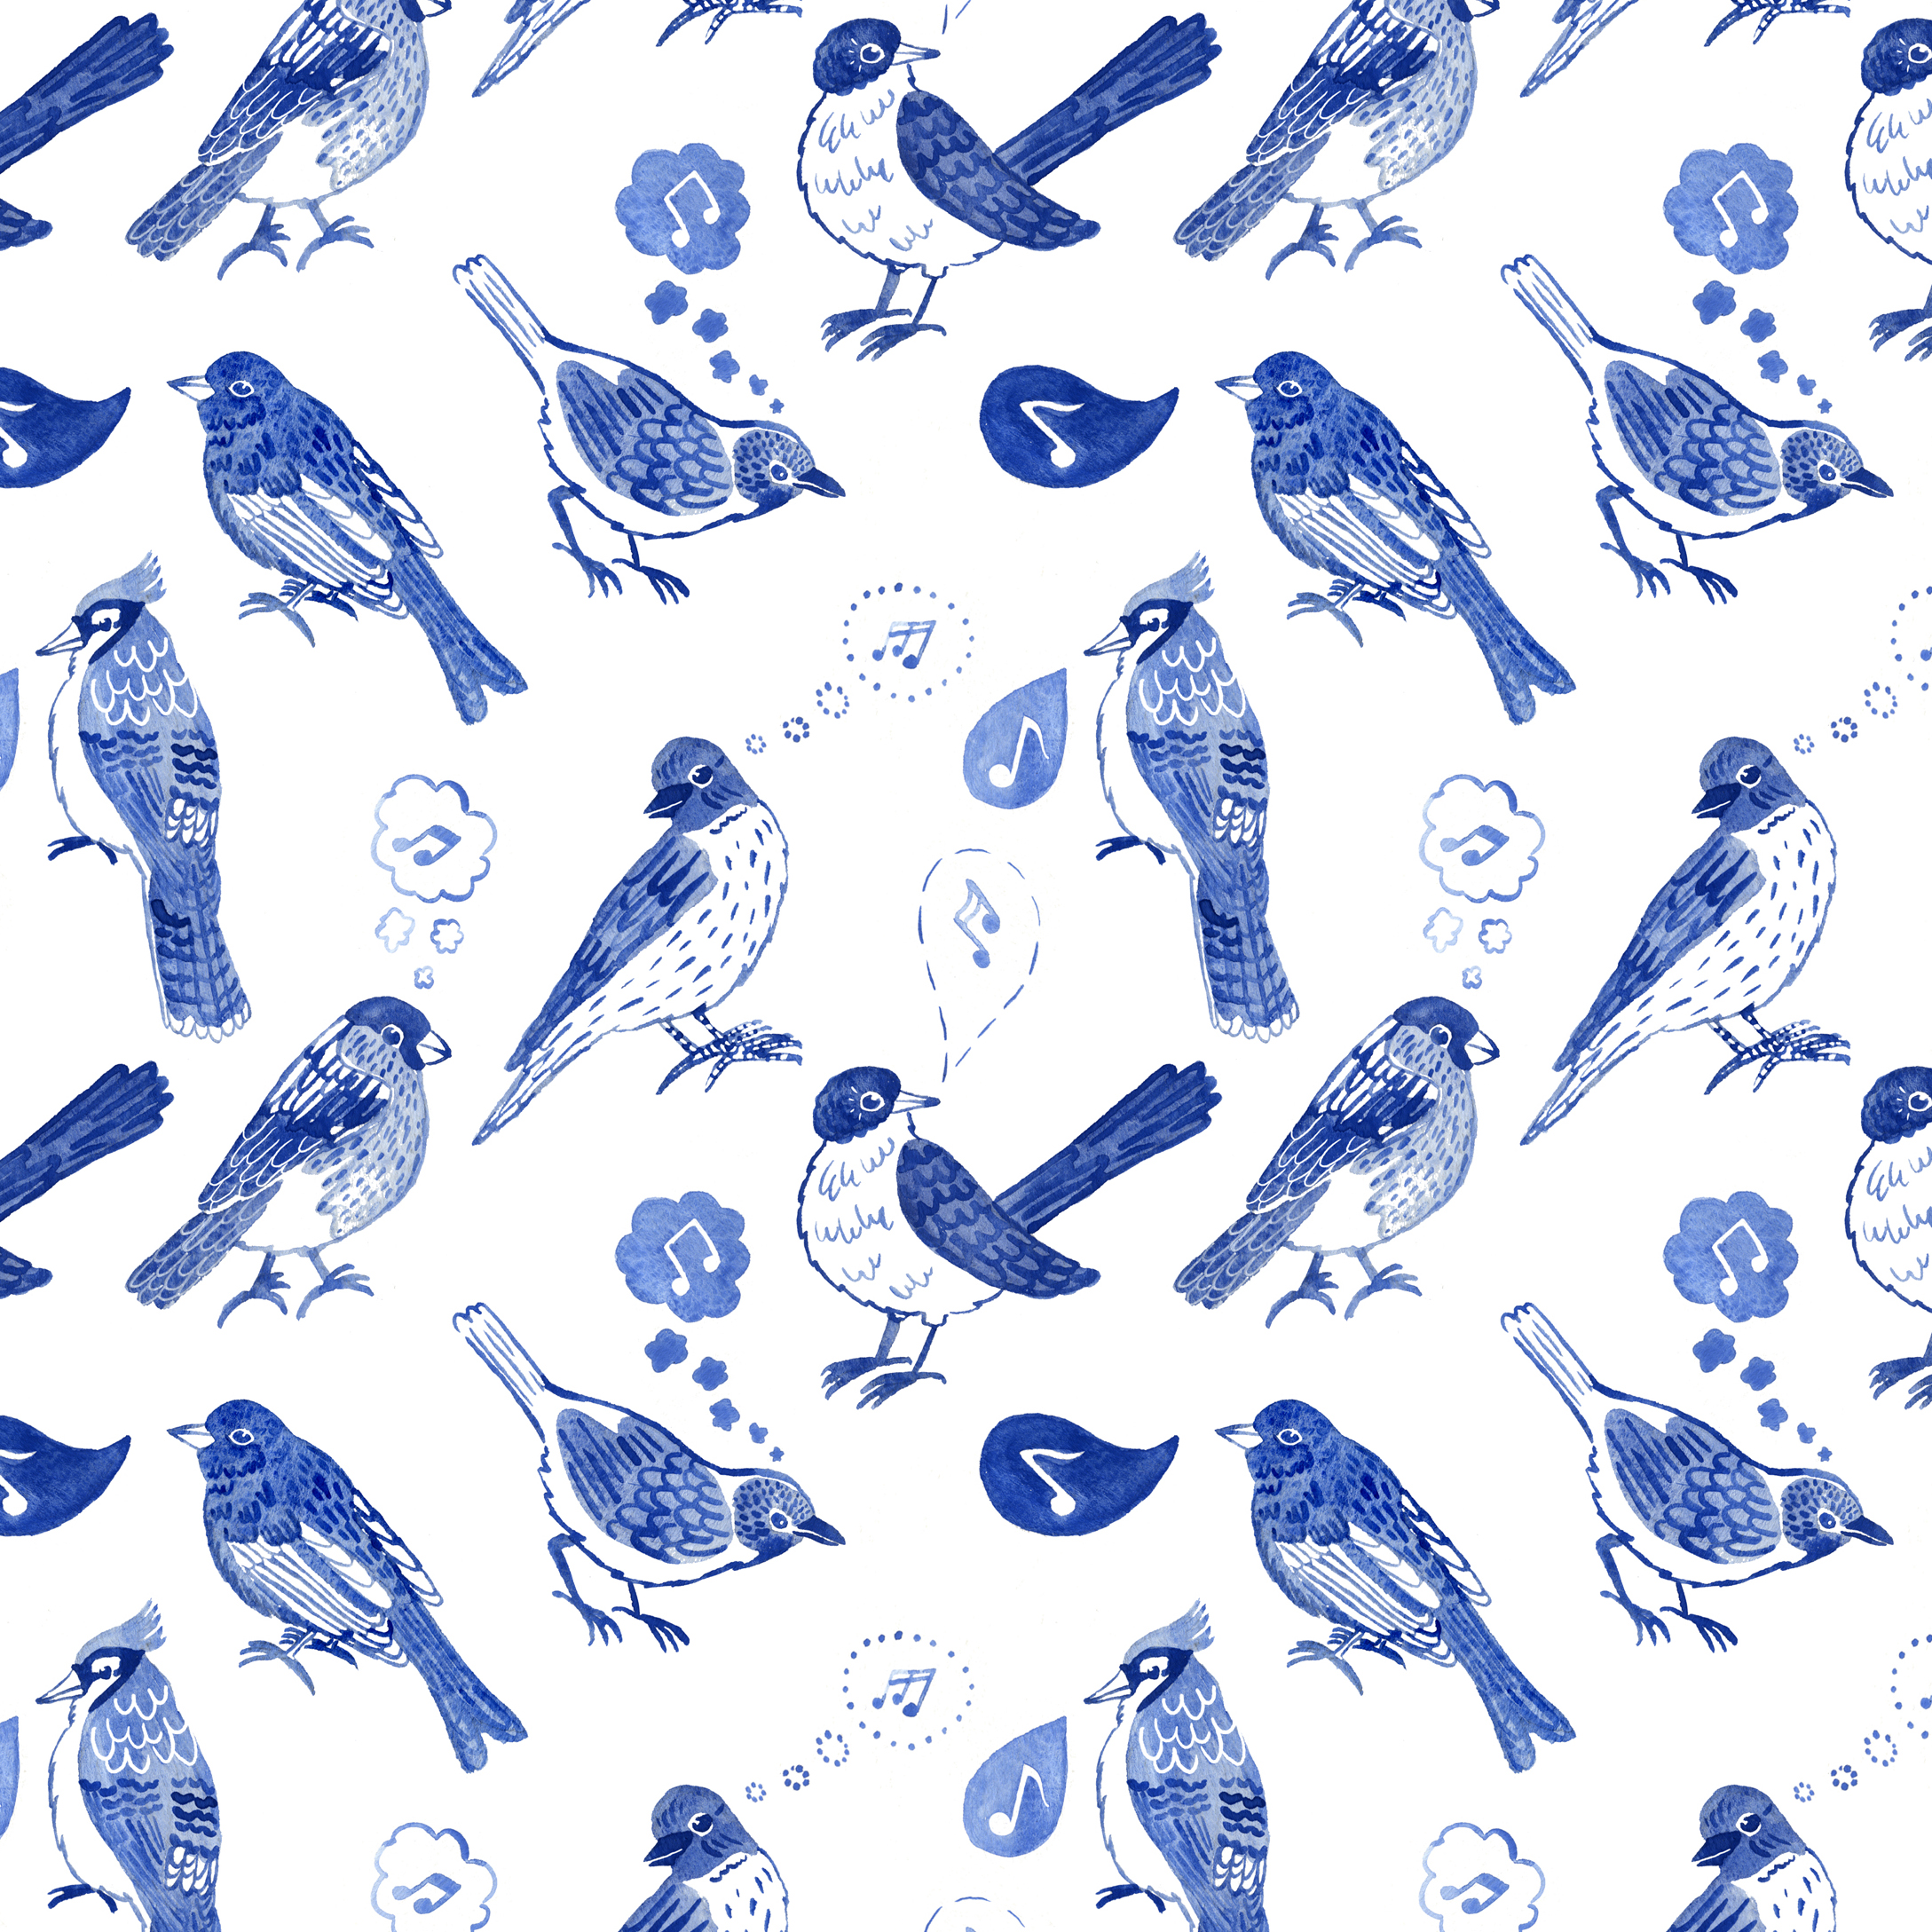 Birdy pattern